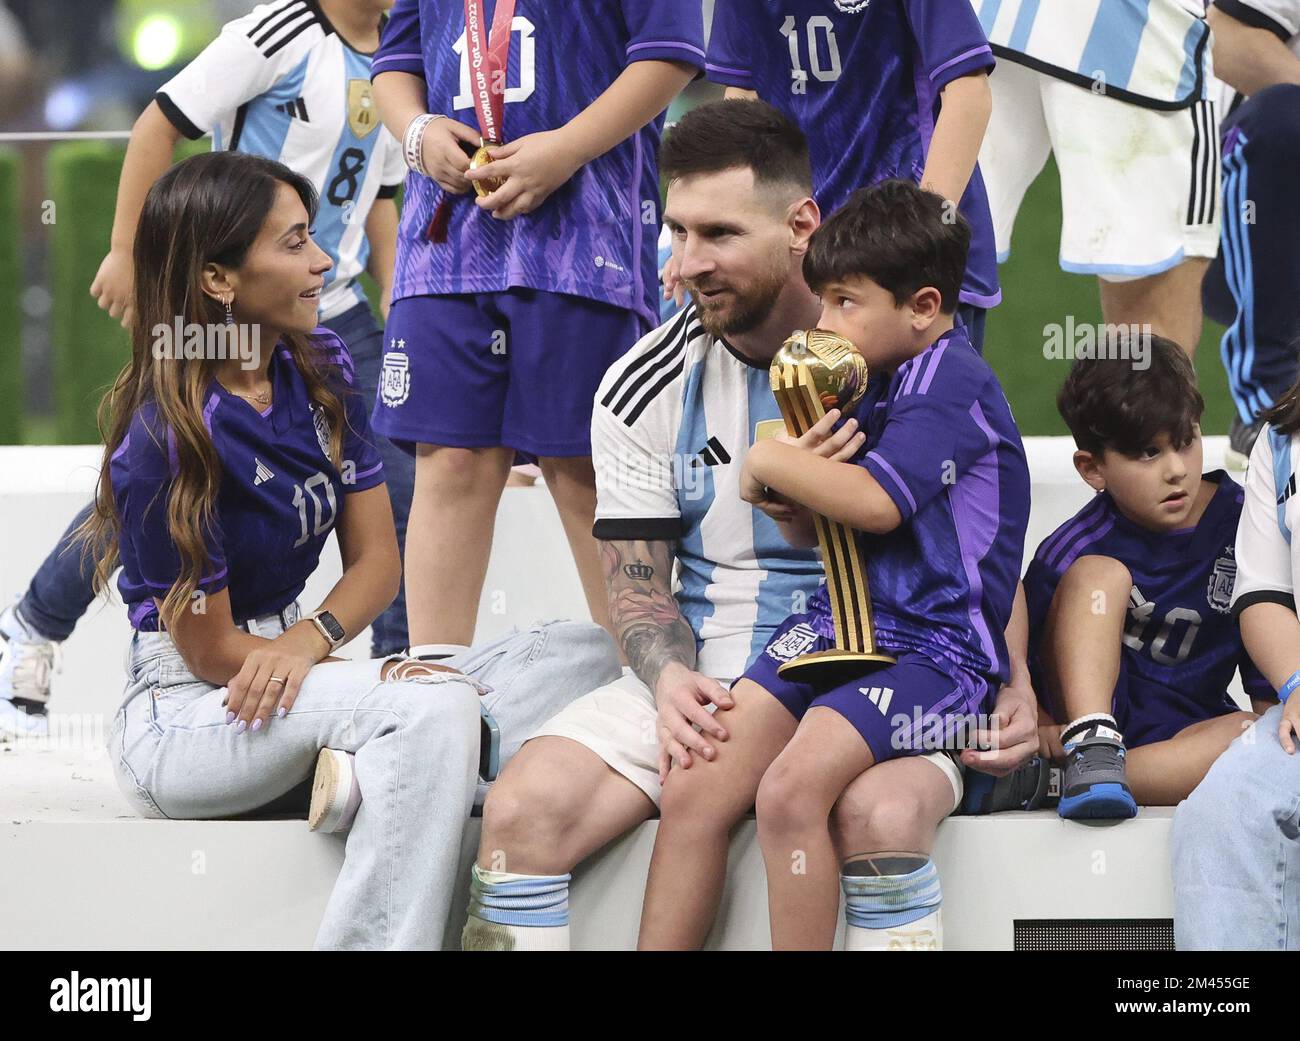 Lionel Messi's Wife Antonela Roccuzzo in Balmain at US Open Cup Final – WWD